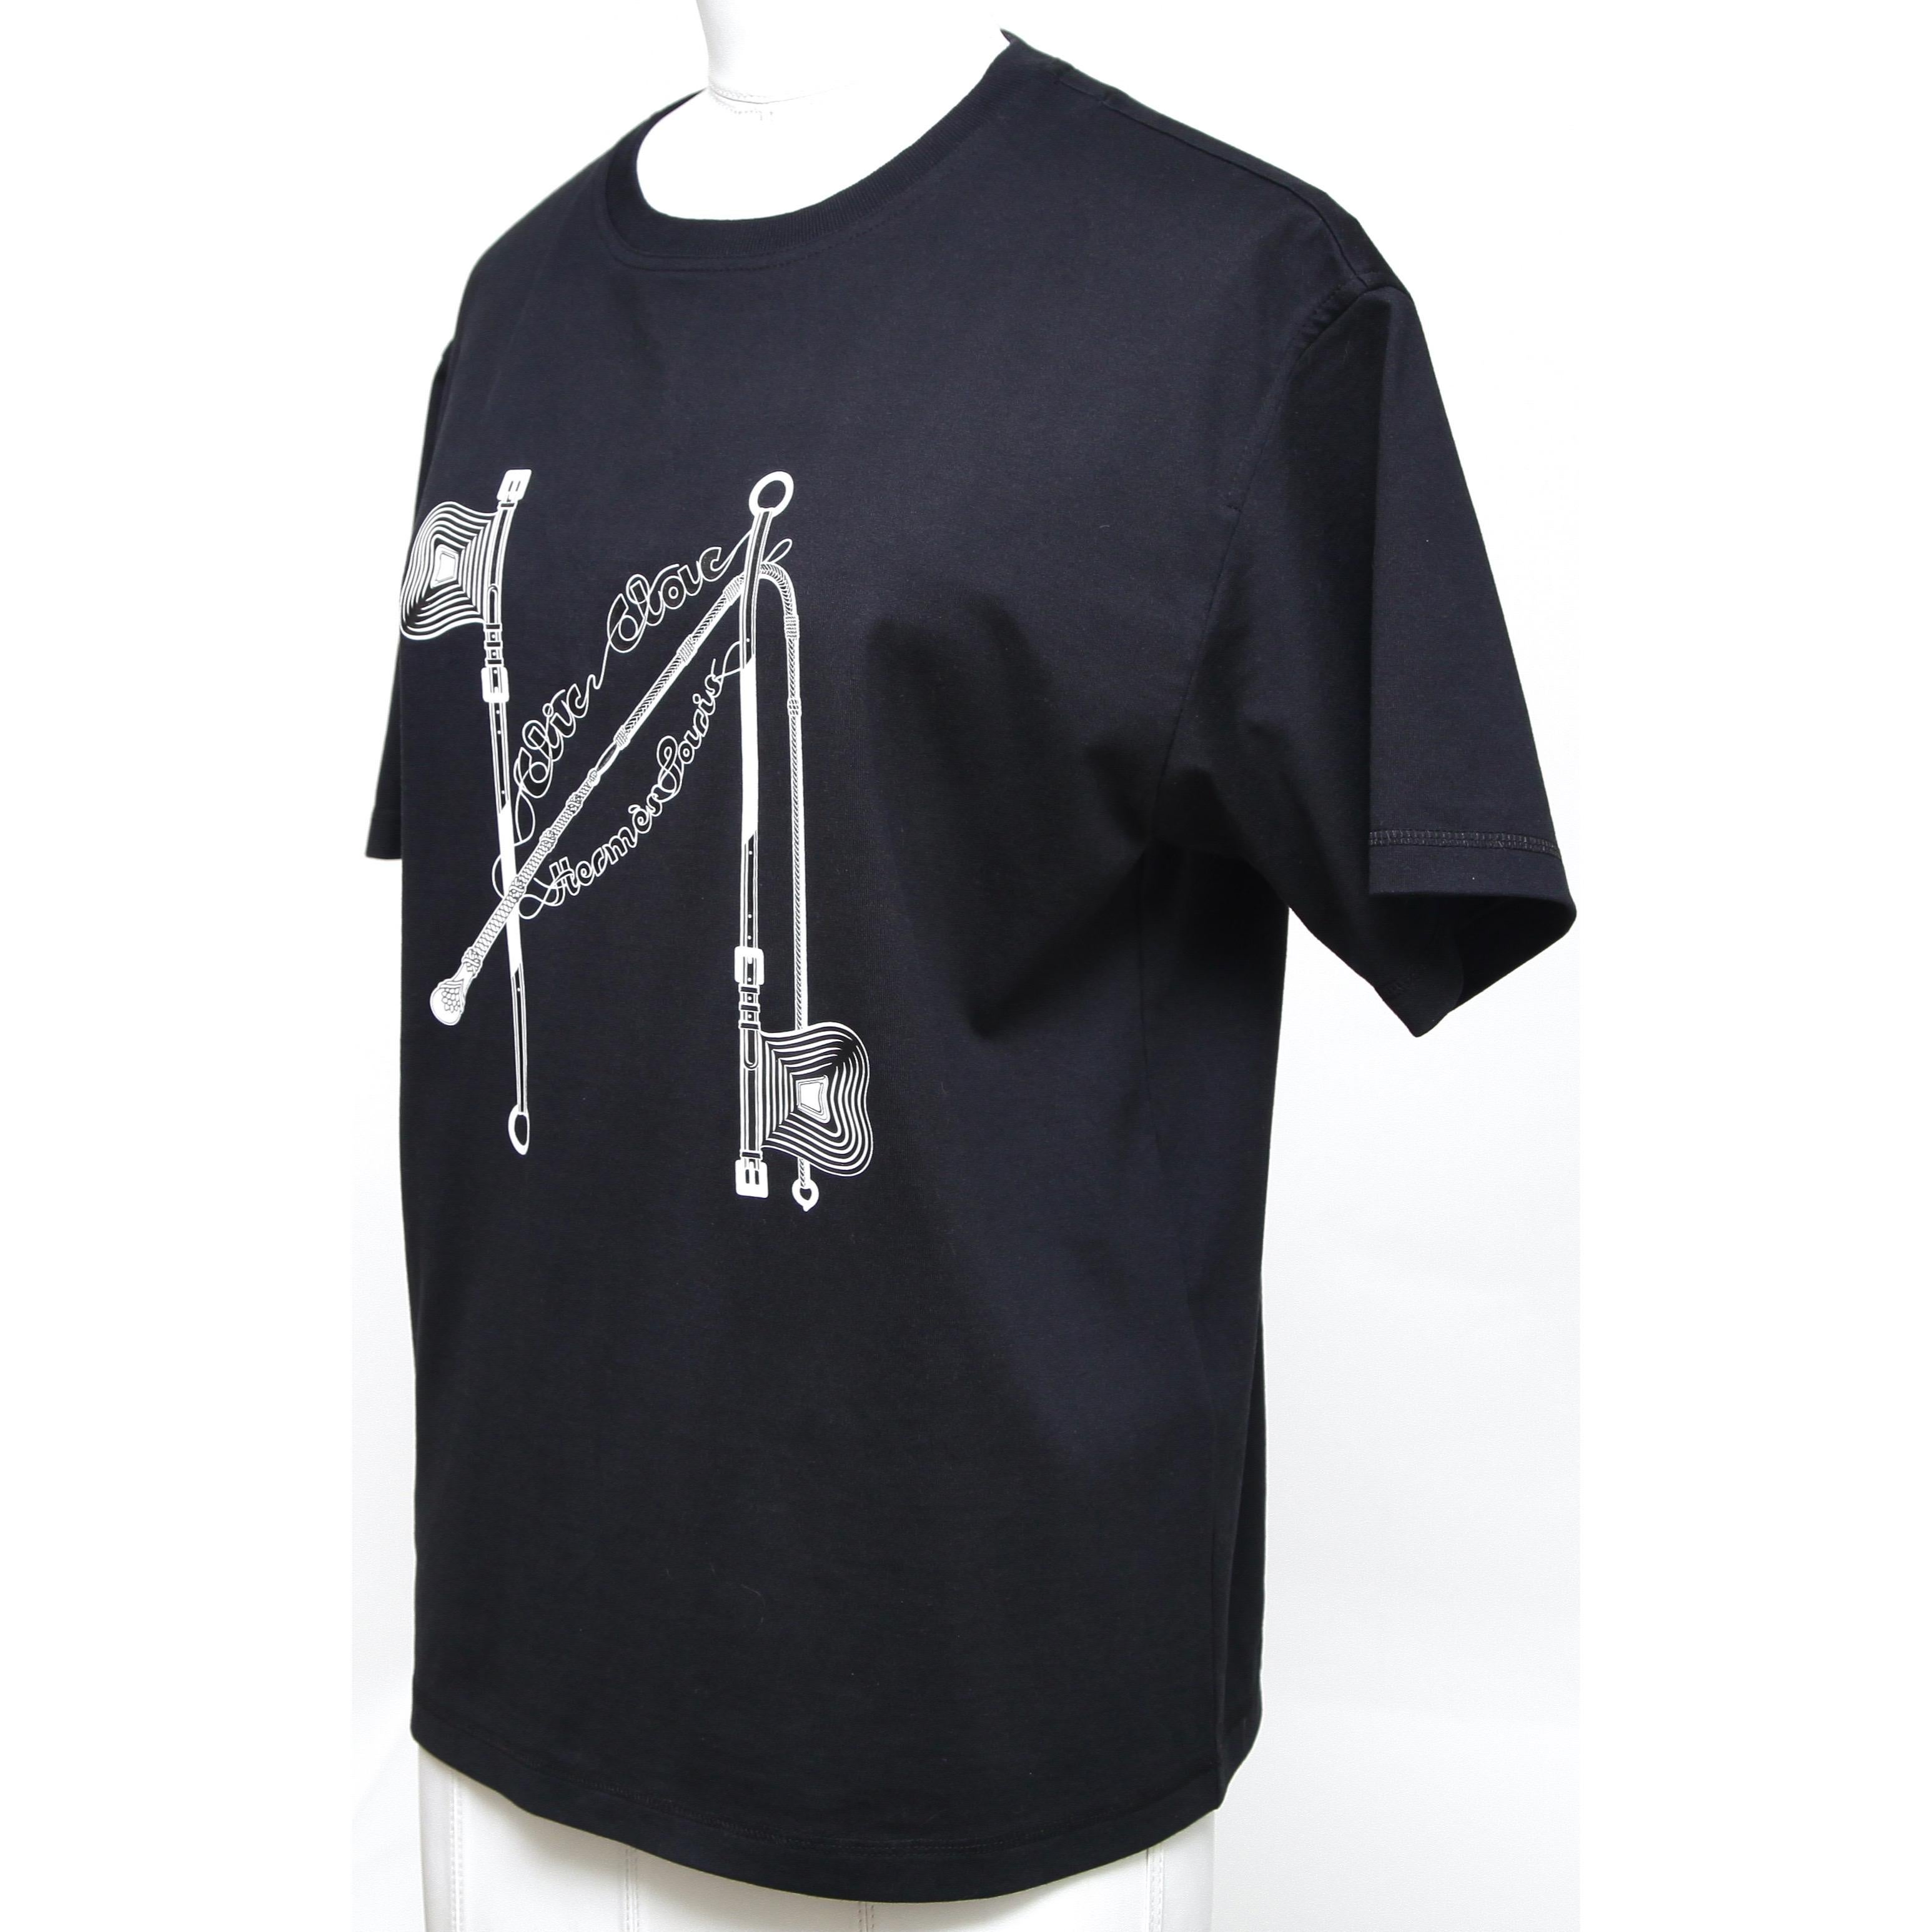 Women's HERMES T-Shirt Top Black White CLIC CLAC Print Pocket Short Sleeve Crew Neck 36 For Sale